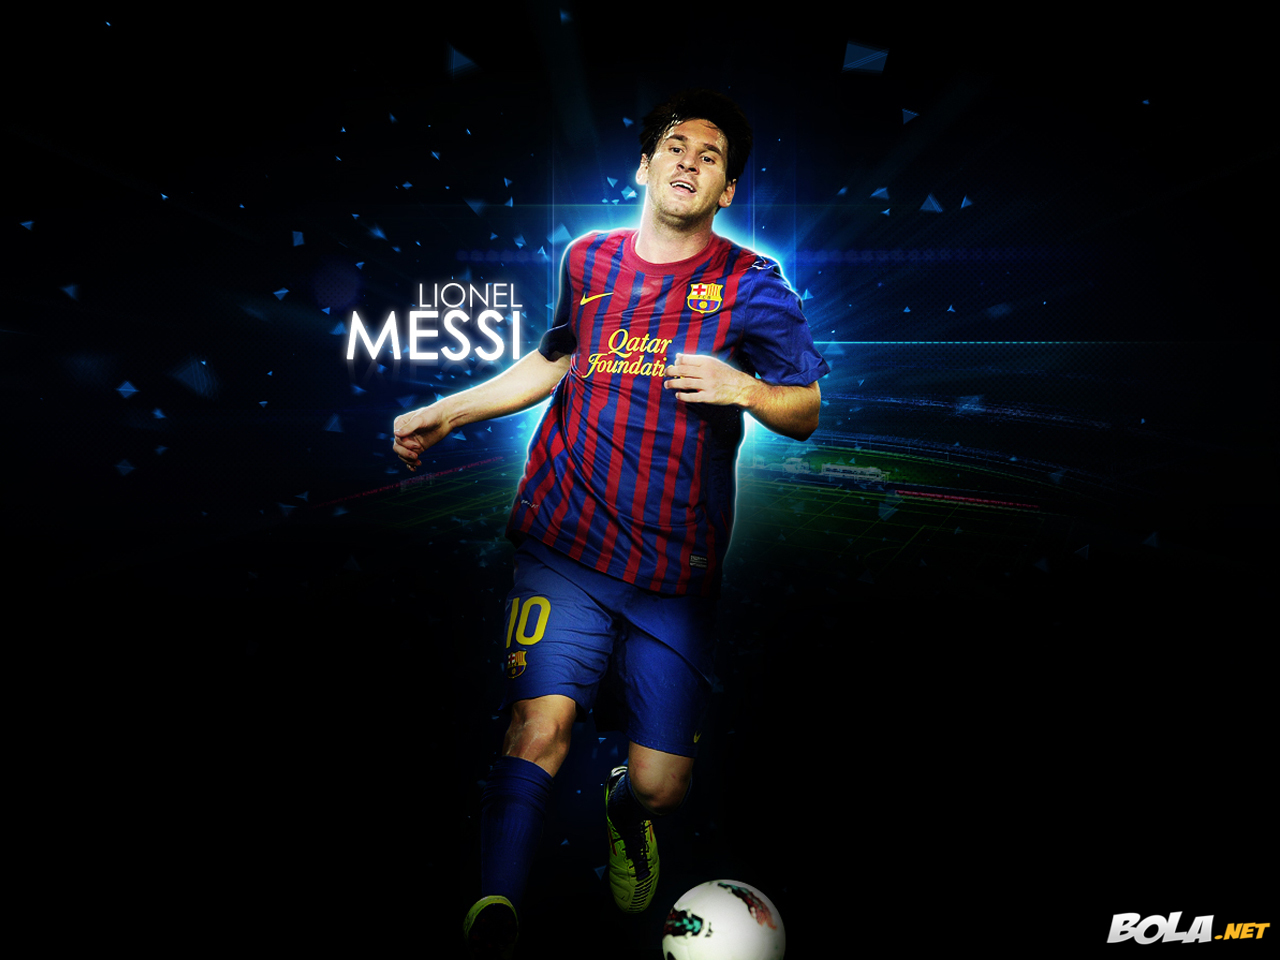 Deskripsi : Wallpaper Lionel Messi, size: 1280x960